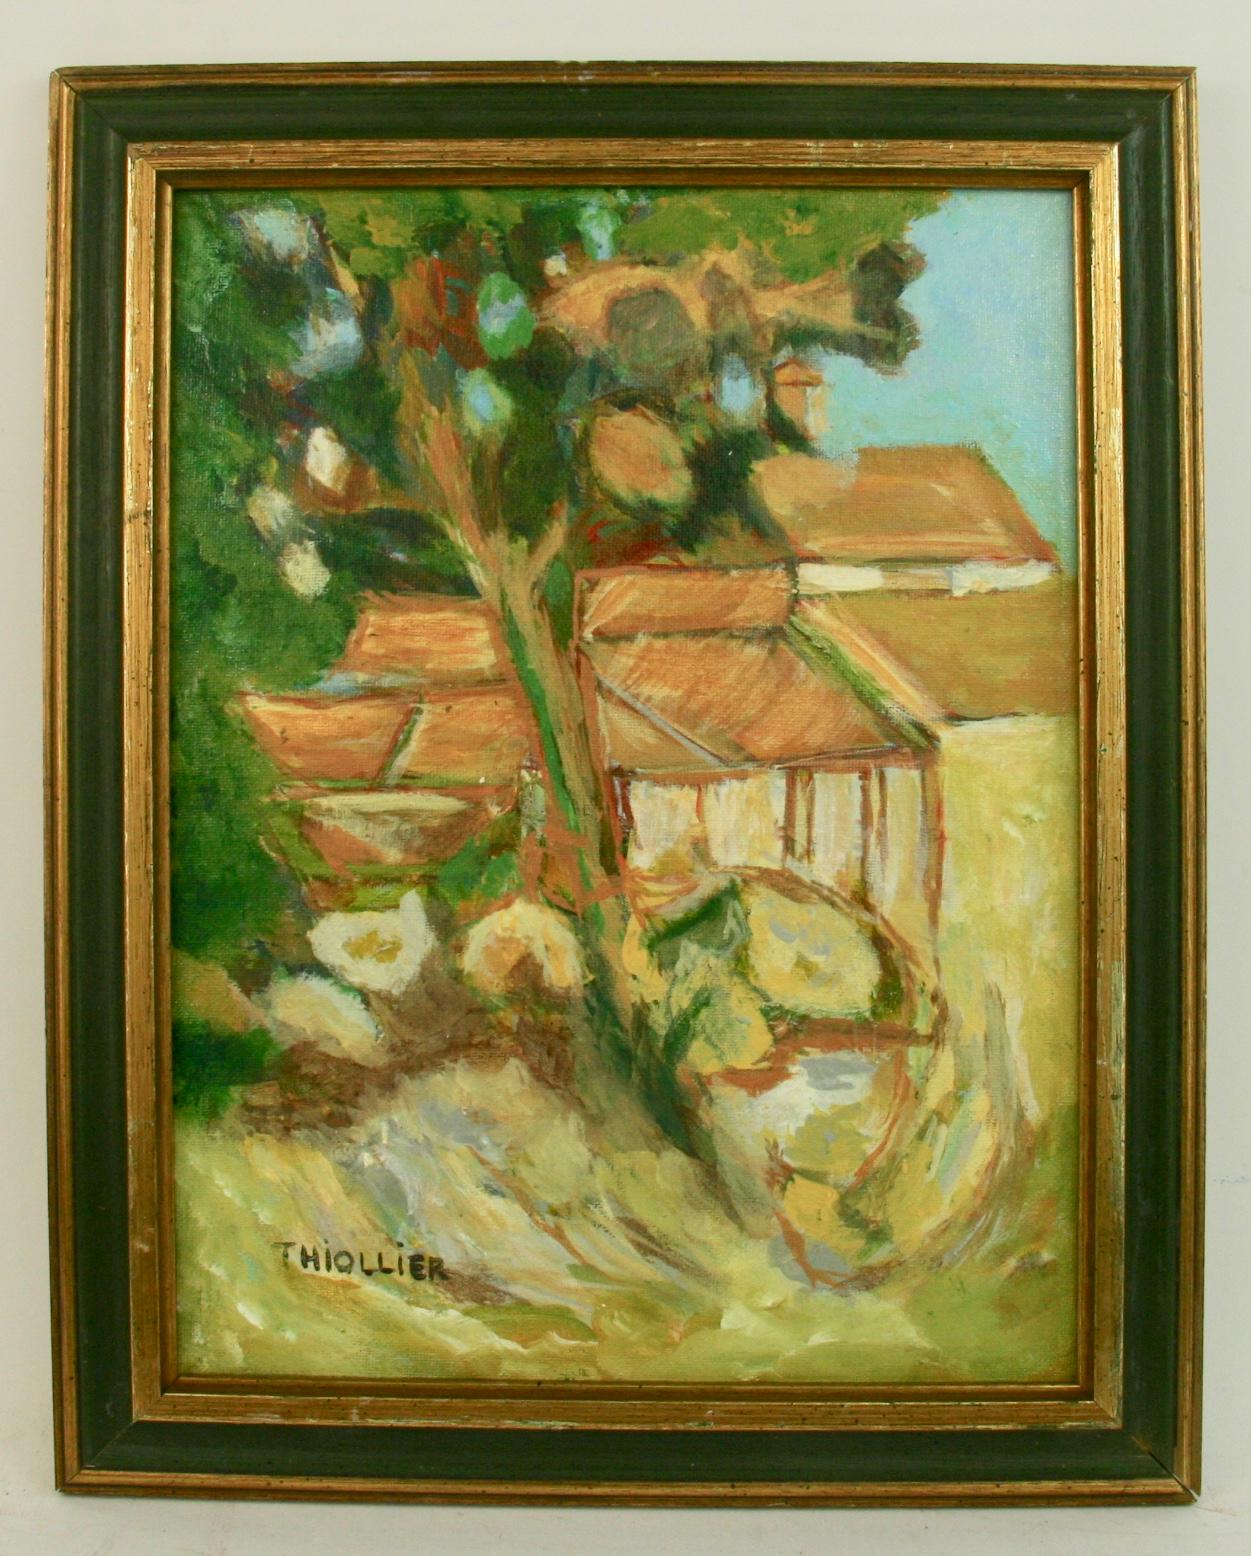 Vintage American Impressionist French Village Landscape Painting 1970 For Sale 3